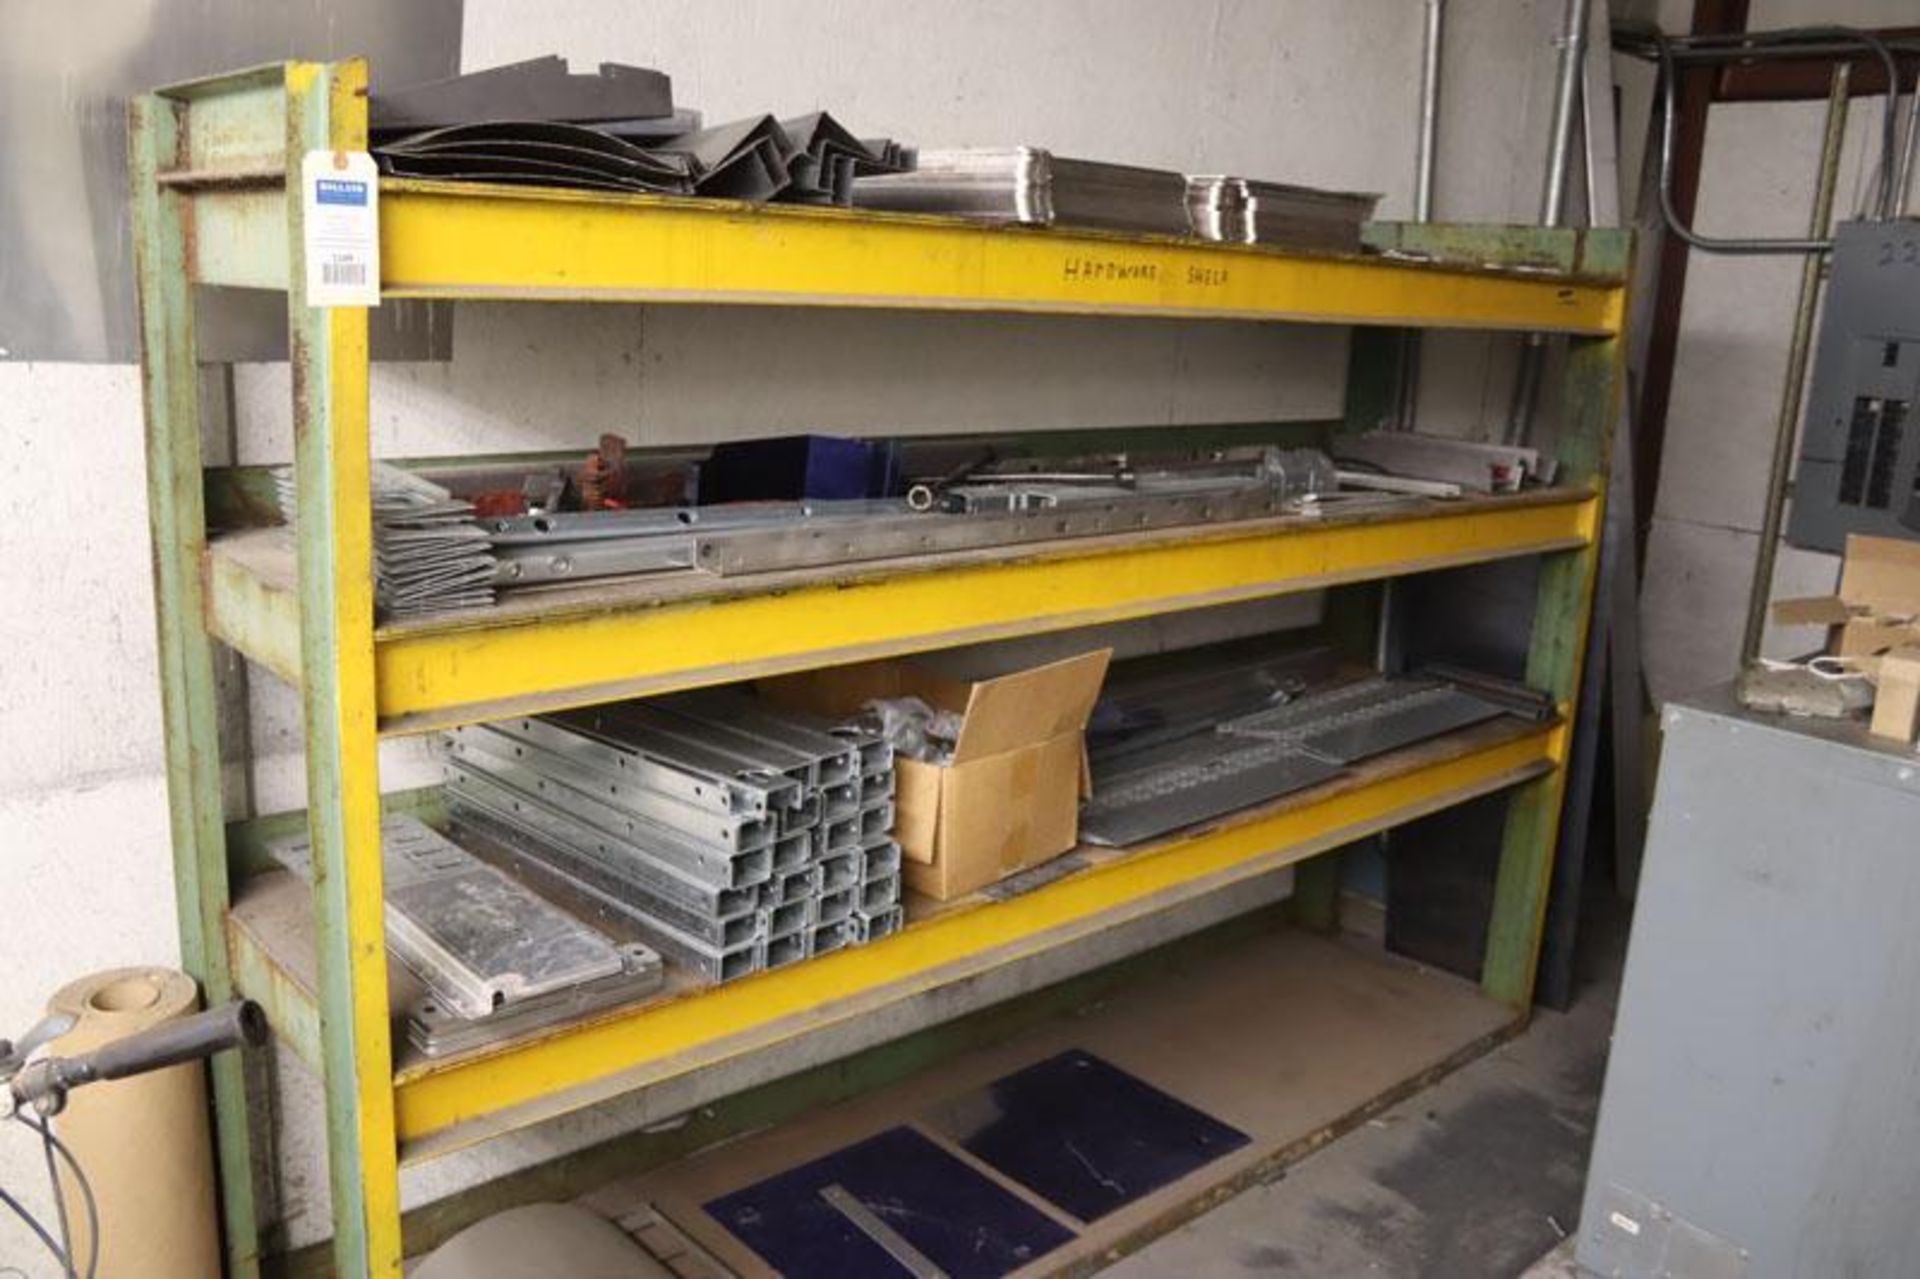 Welded Steel Shelf Unit 2'x8'x67" Tall-NO CONTENTS